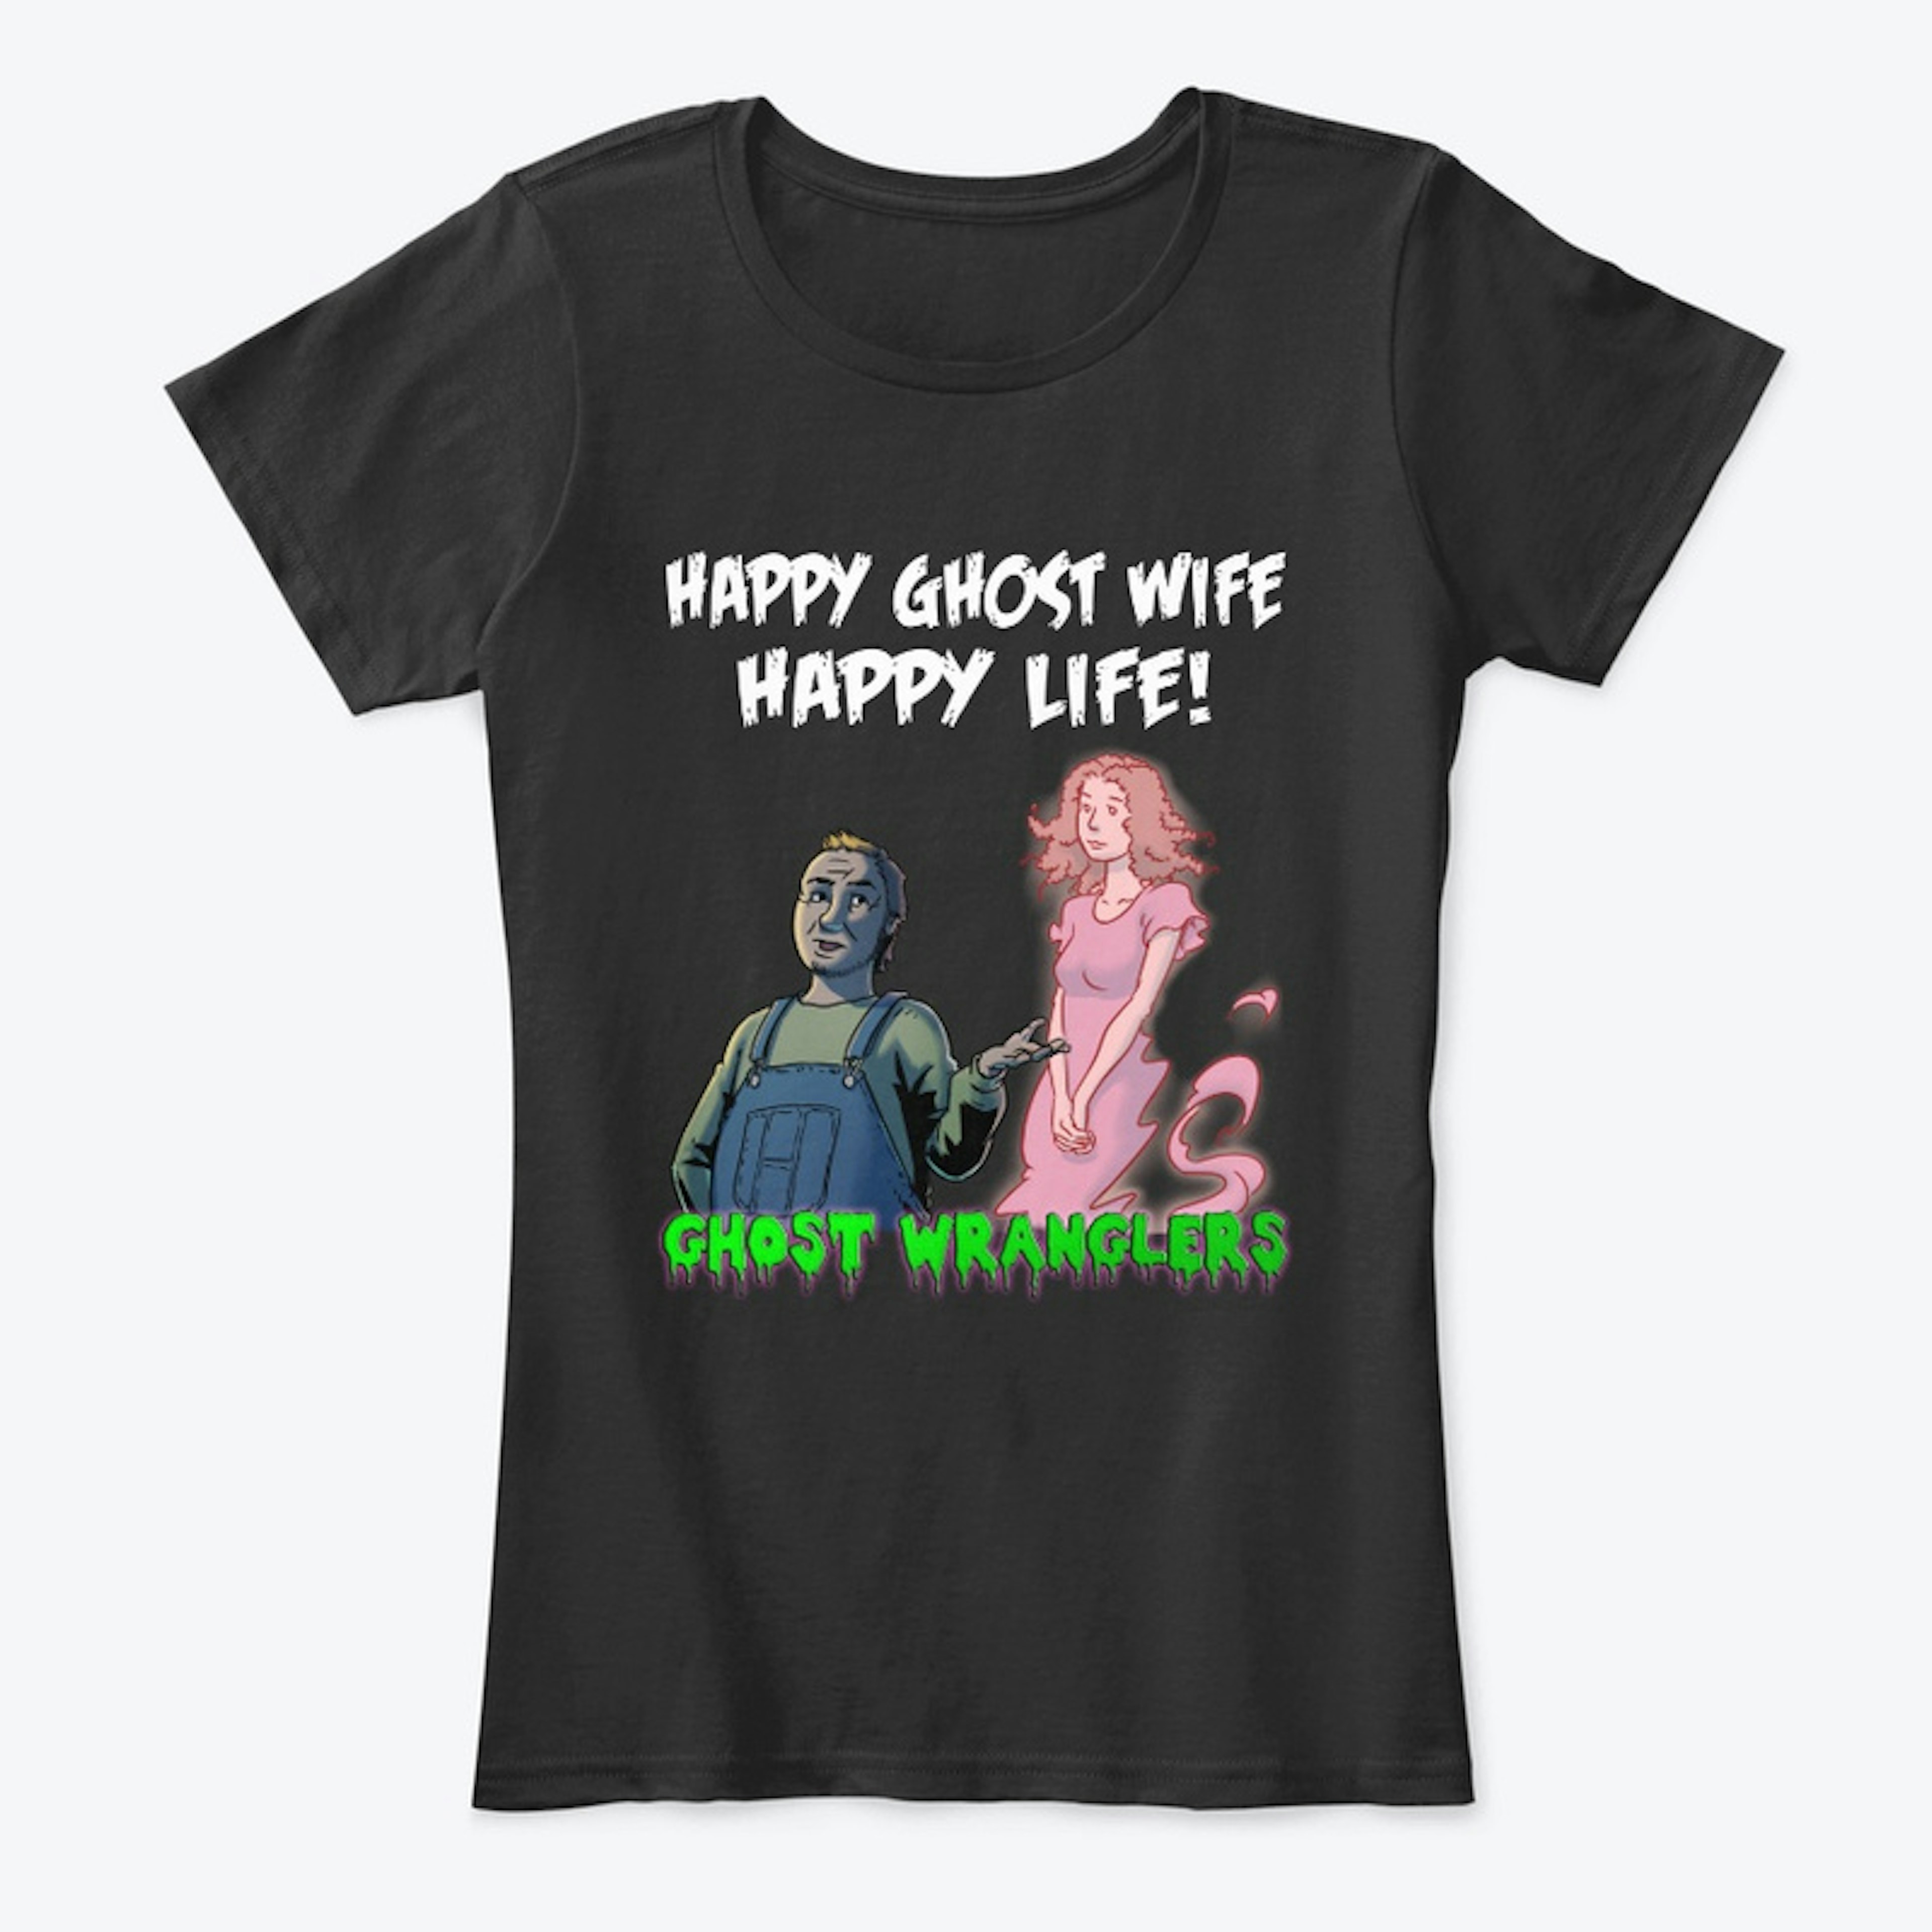 "Happy Ghost Wife, Happy Life"